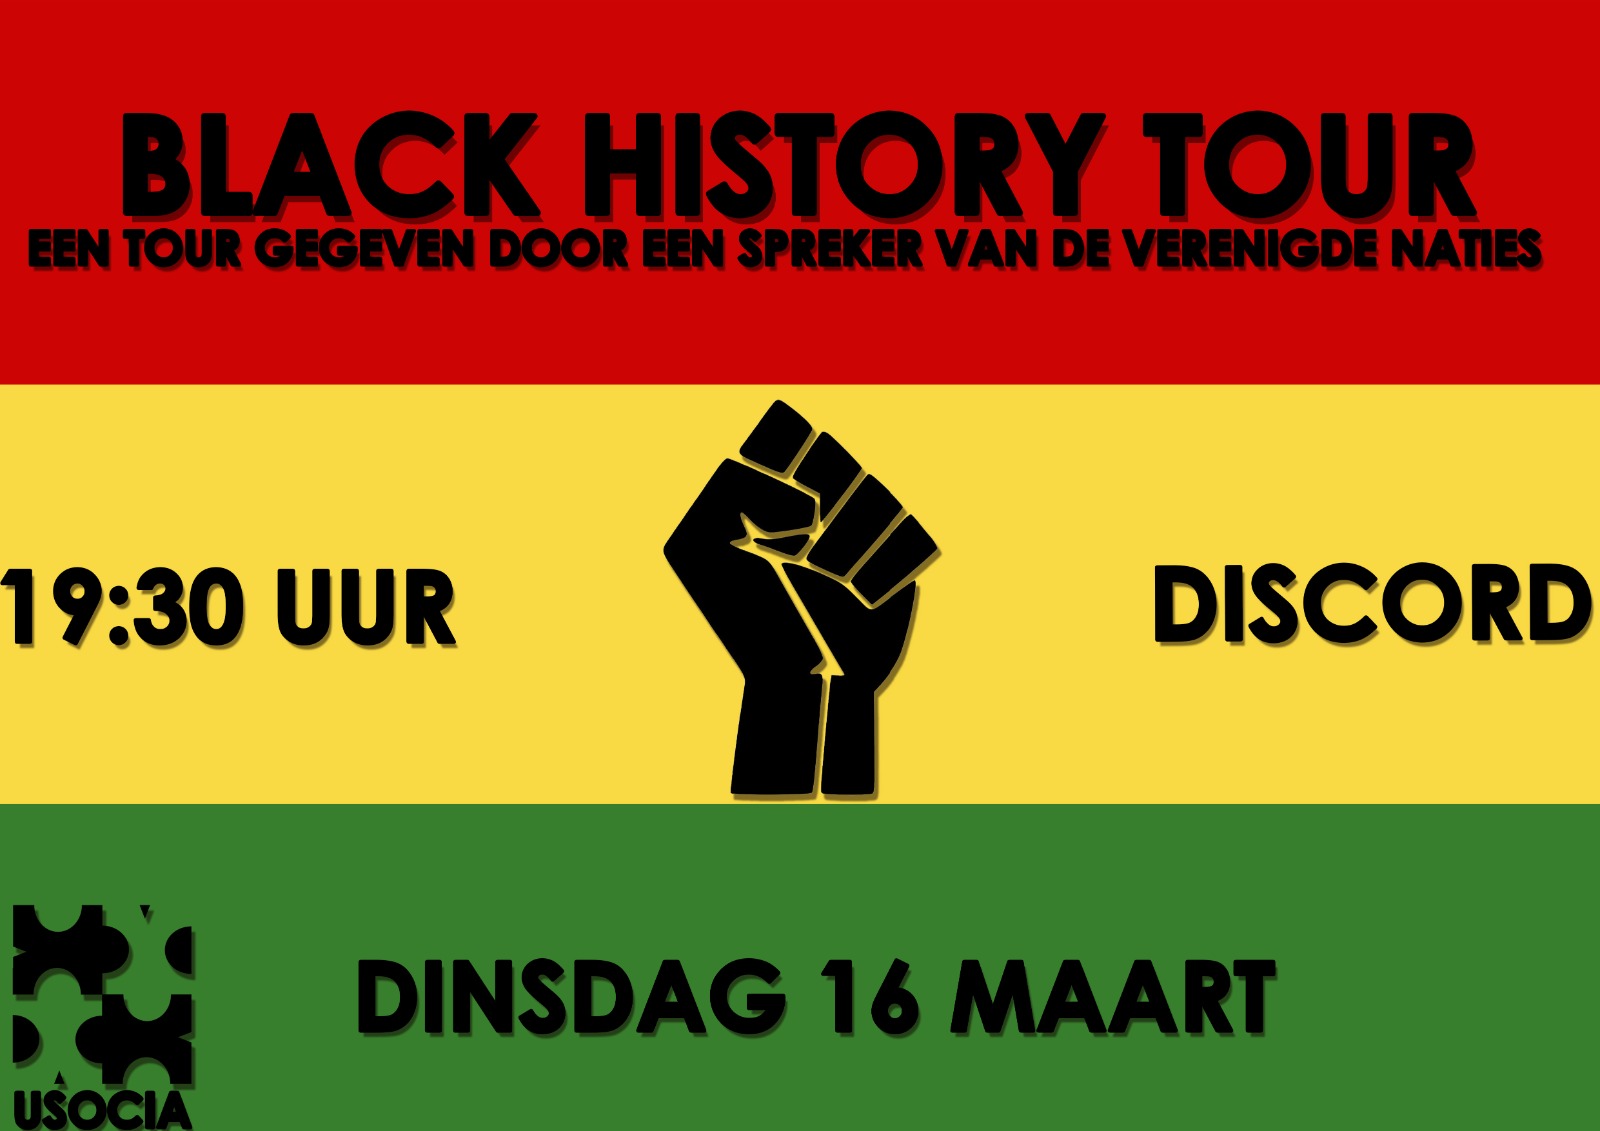 Black History tour